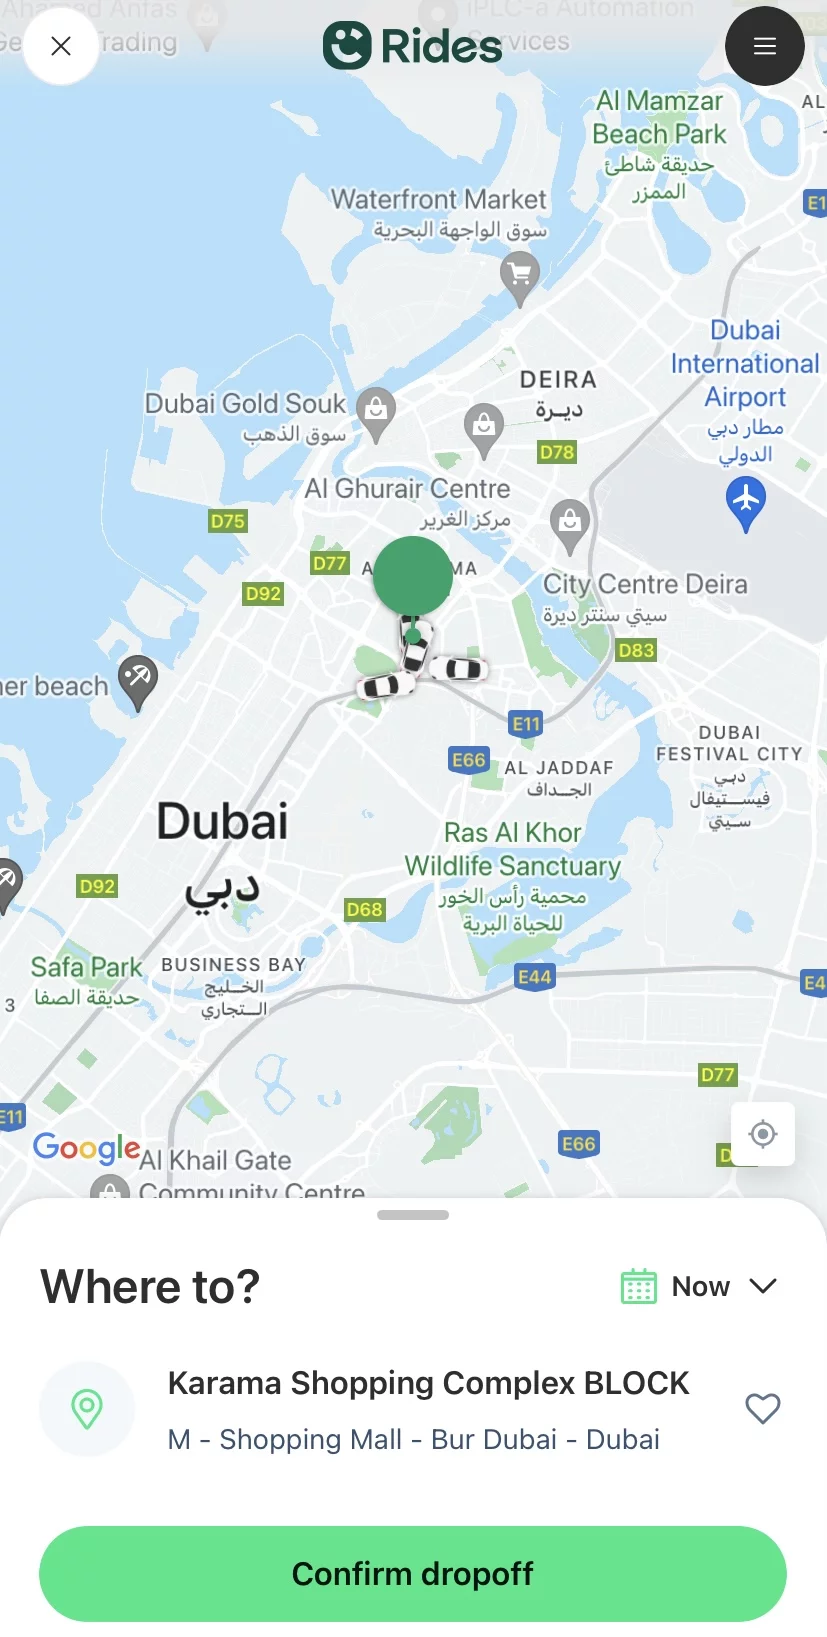 Dubai Taxi - How To Order